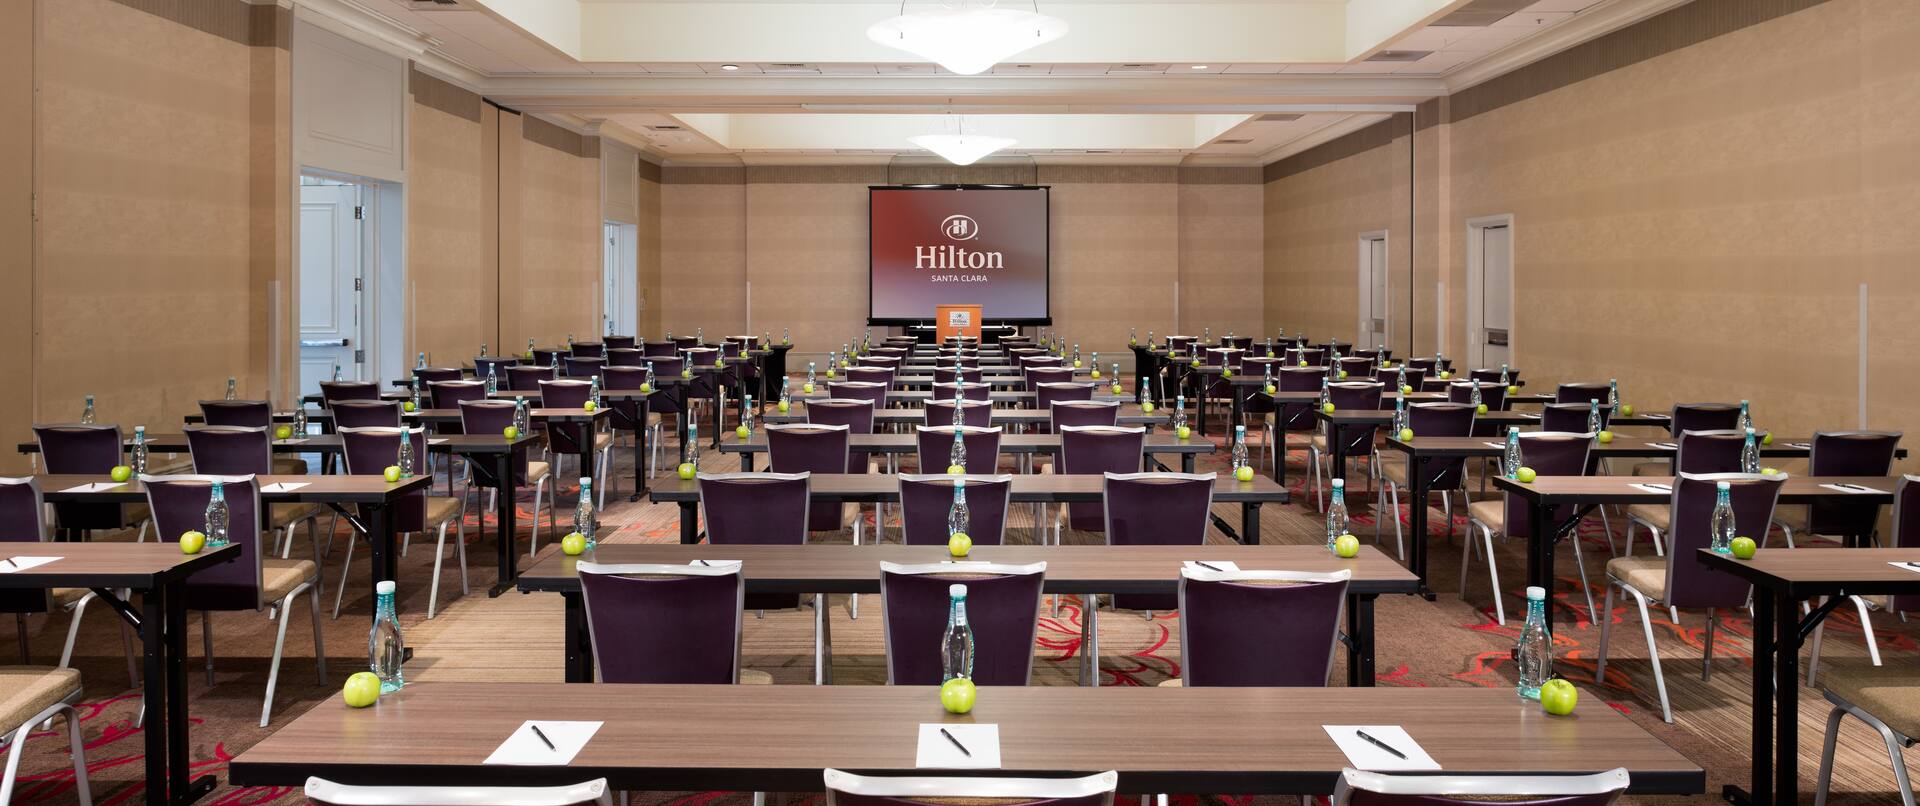 Santa Clara Convention Center Hotels Hilton Santa Clara Events